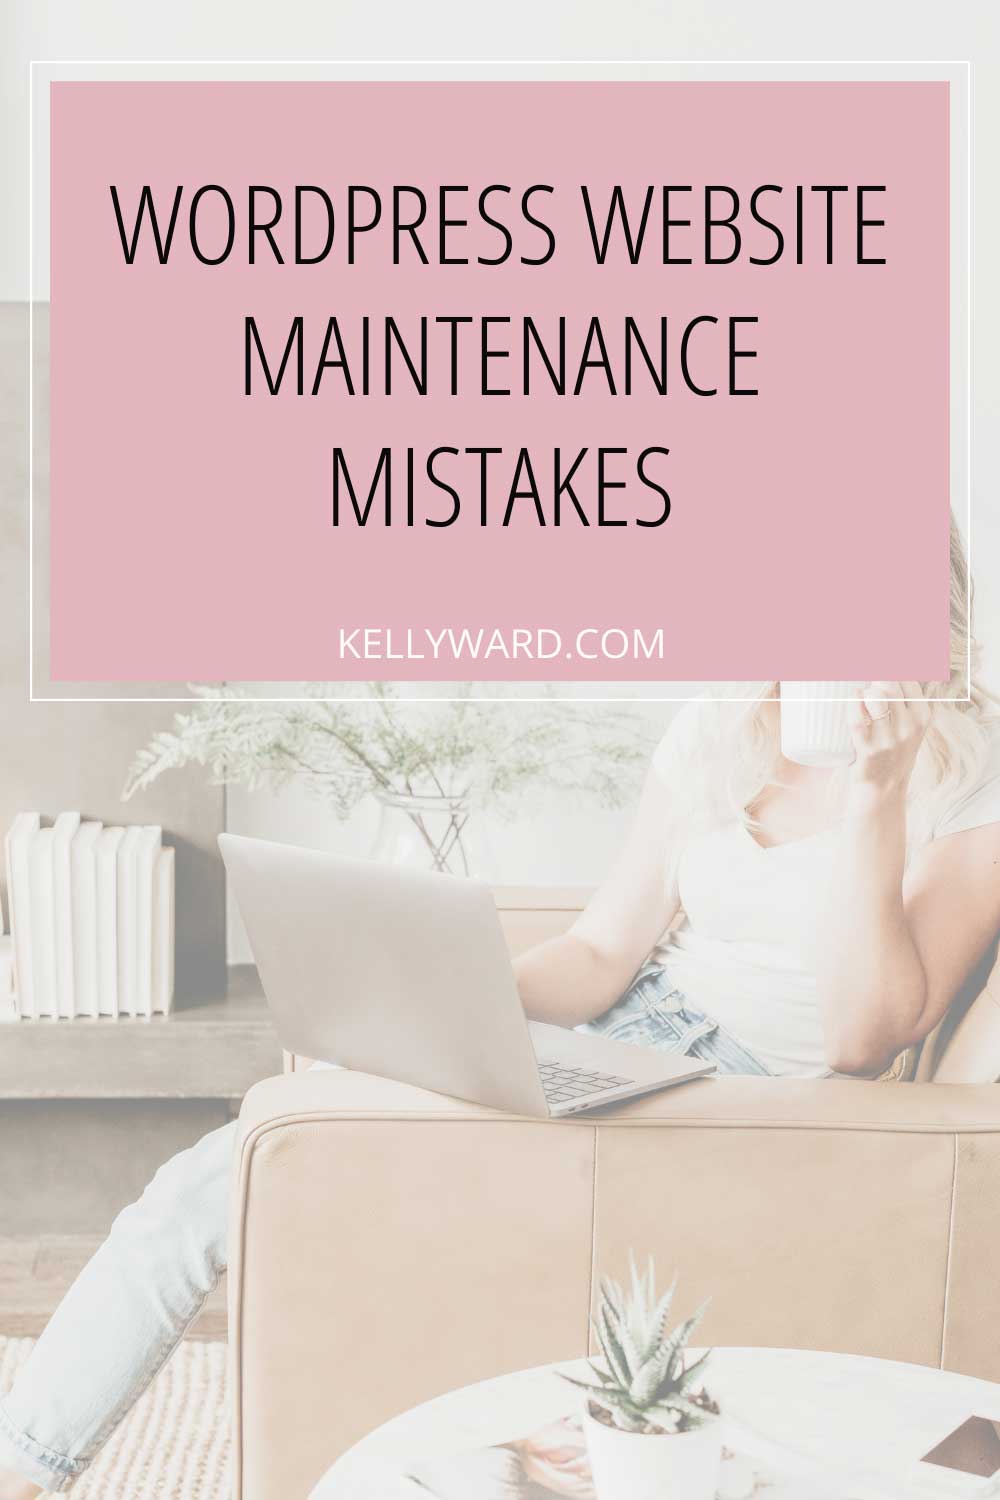 WordPress Website Maintenance Mistakes